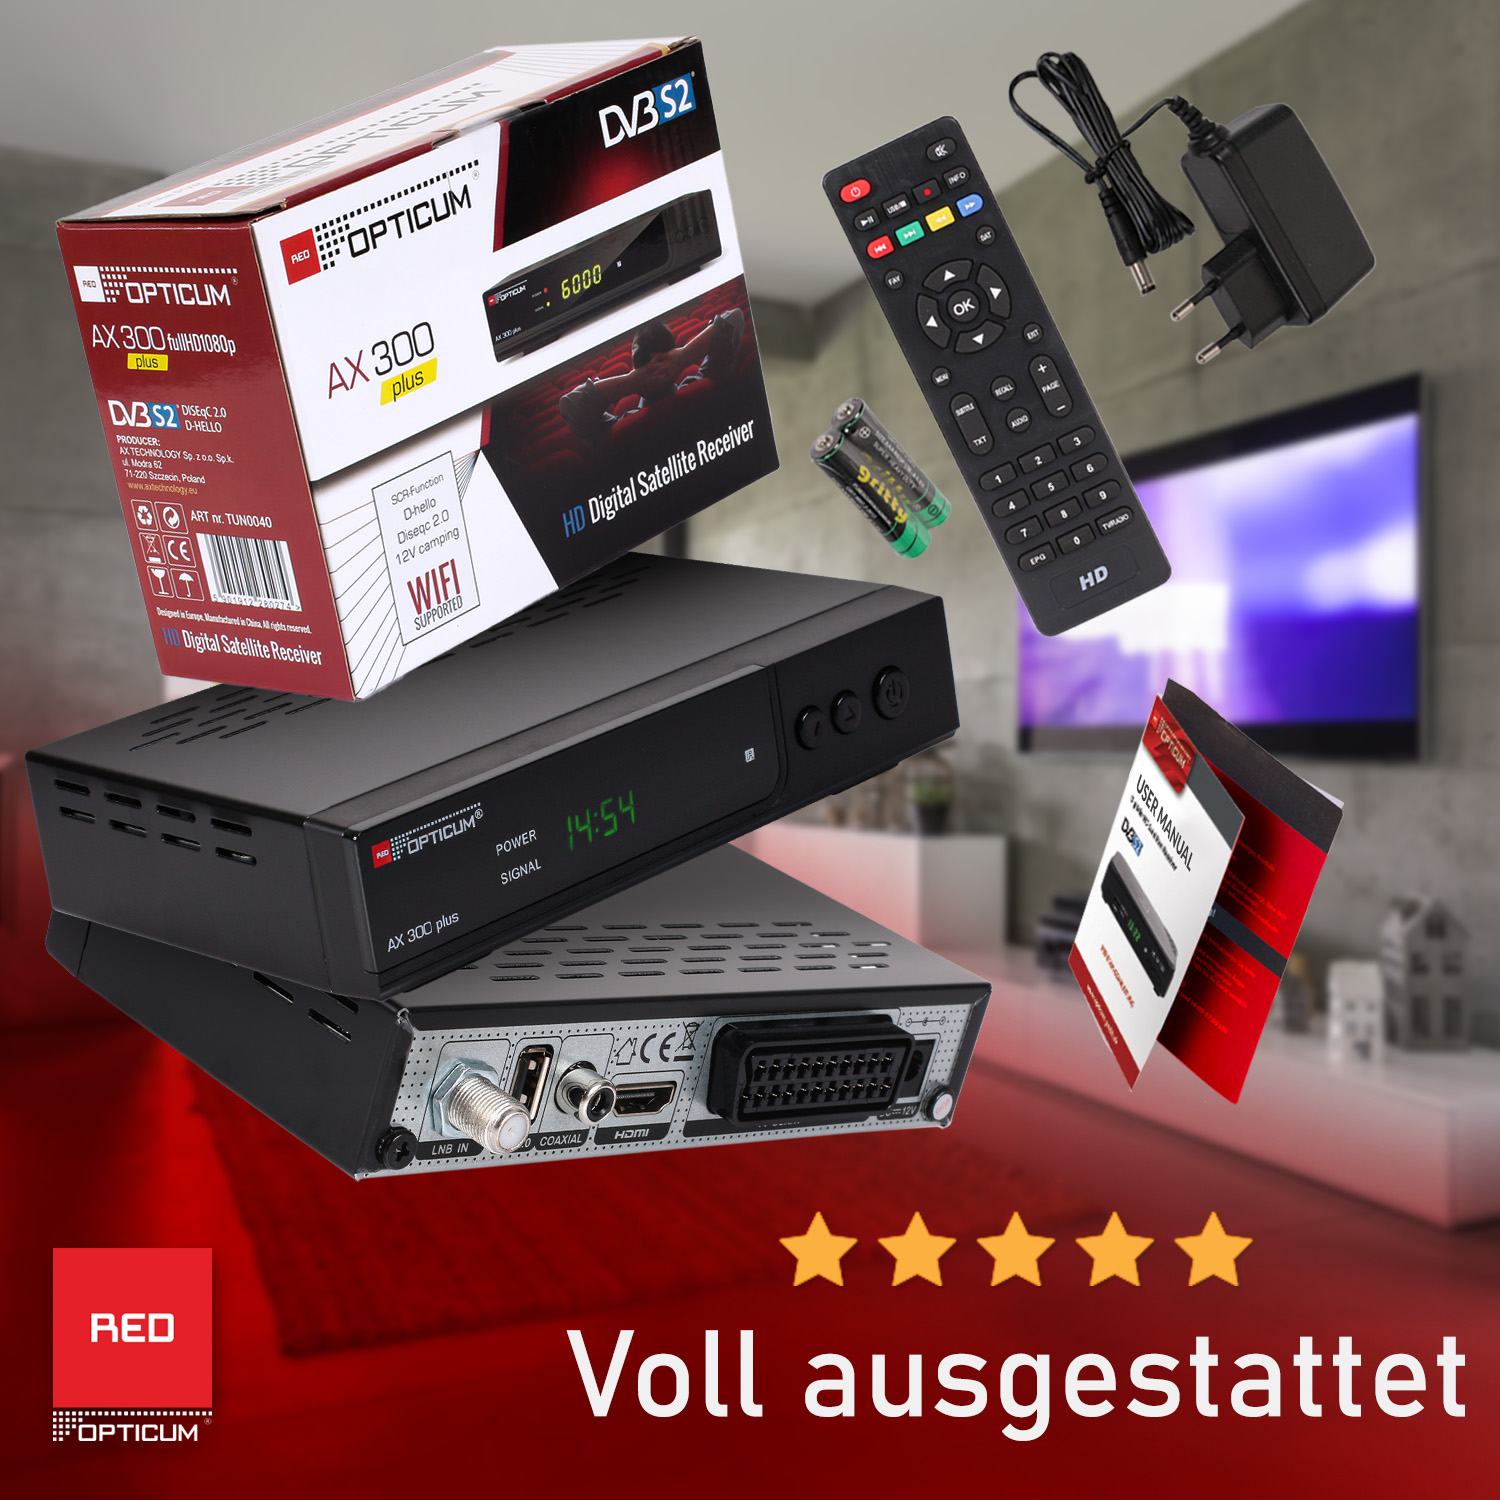 (HDTV, DVB-S2 - DVB-S2 schwarz) DVB-S2, USB Plus SCART - Satelliten-Receiver 300 Sat Digitaler AX Receiver Receiver HD DVB-S, HD - RED - OPTICUM HDMI 2.0 I